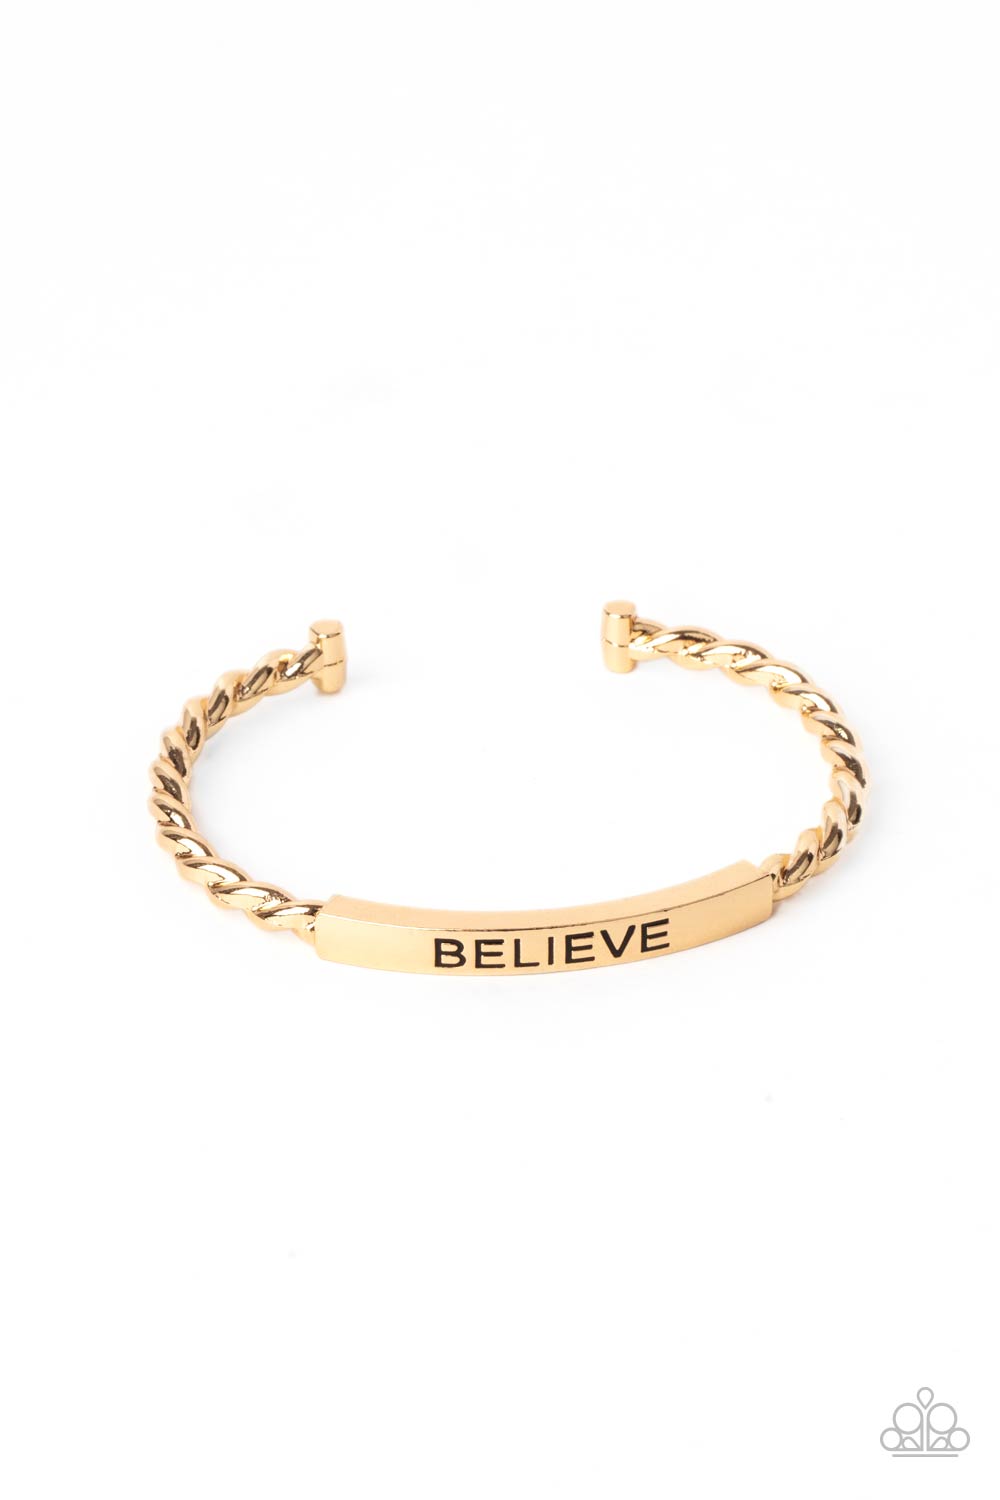 Keep Calm and Believe - Gold cuff bracelet B050